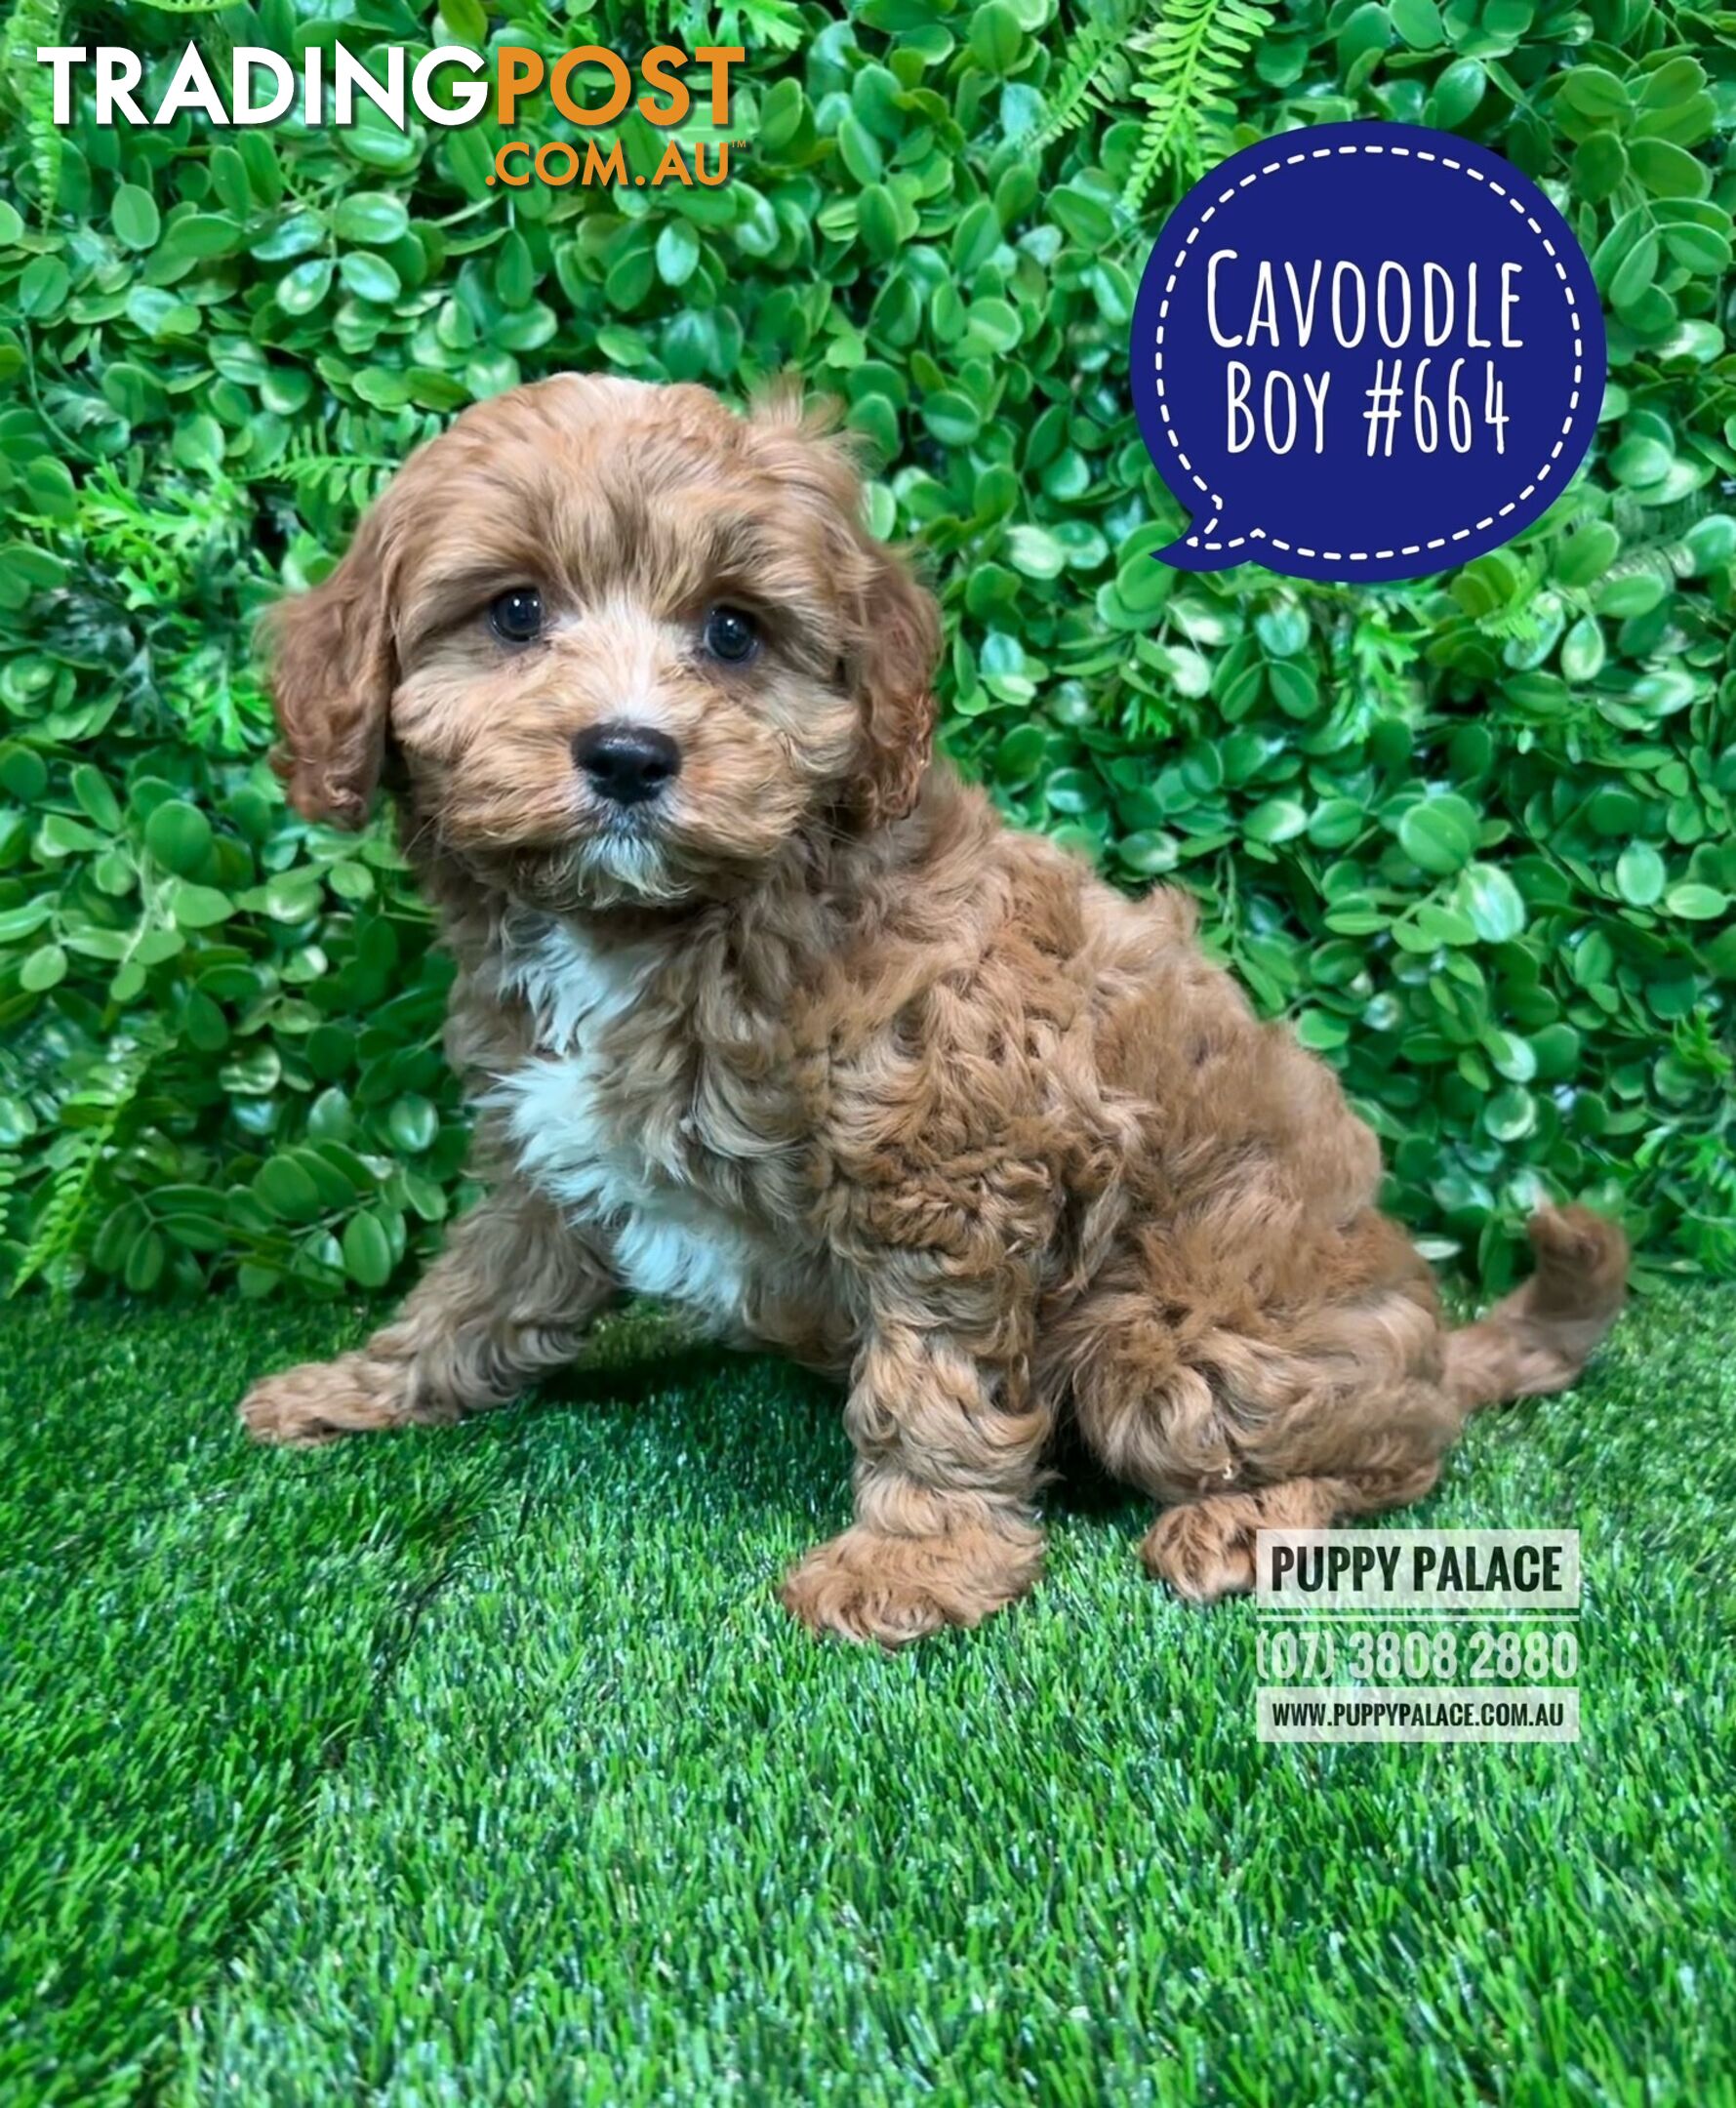 Cavoodle / Cavapoo (Toy/Mini Poodle X Cavalier) - Boys